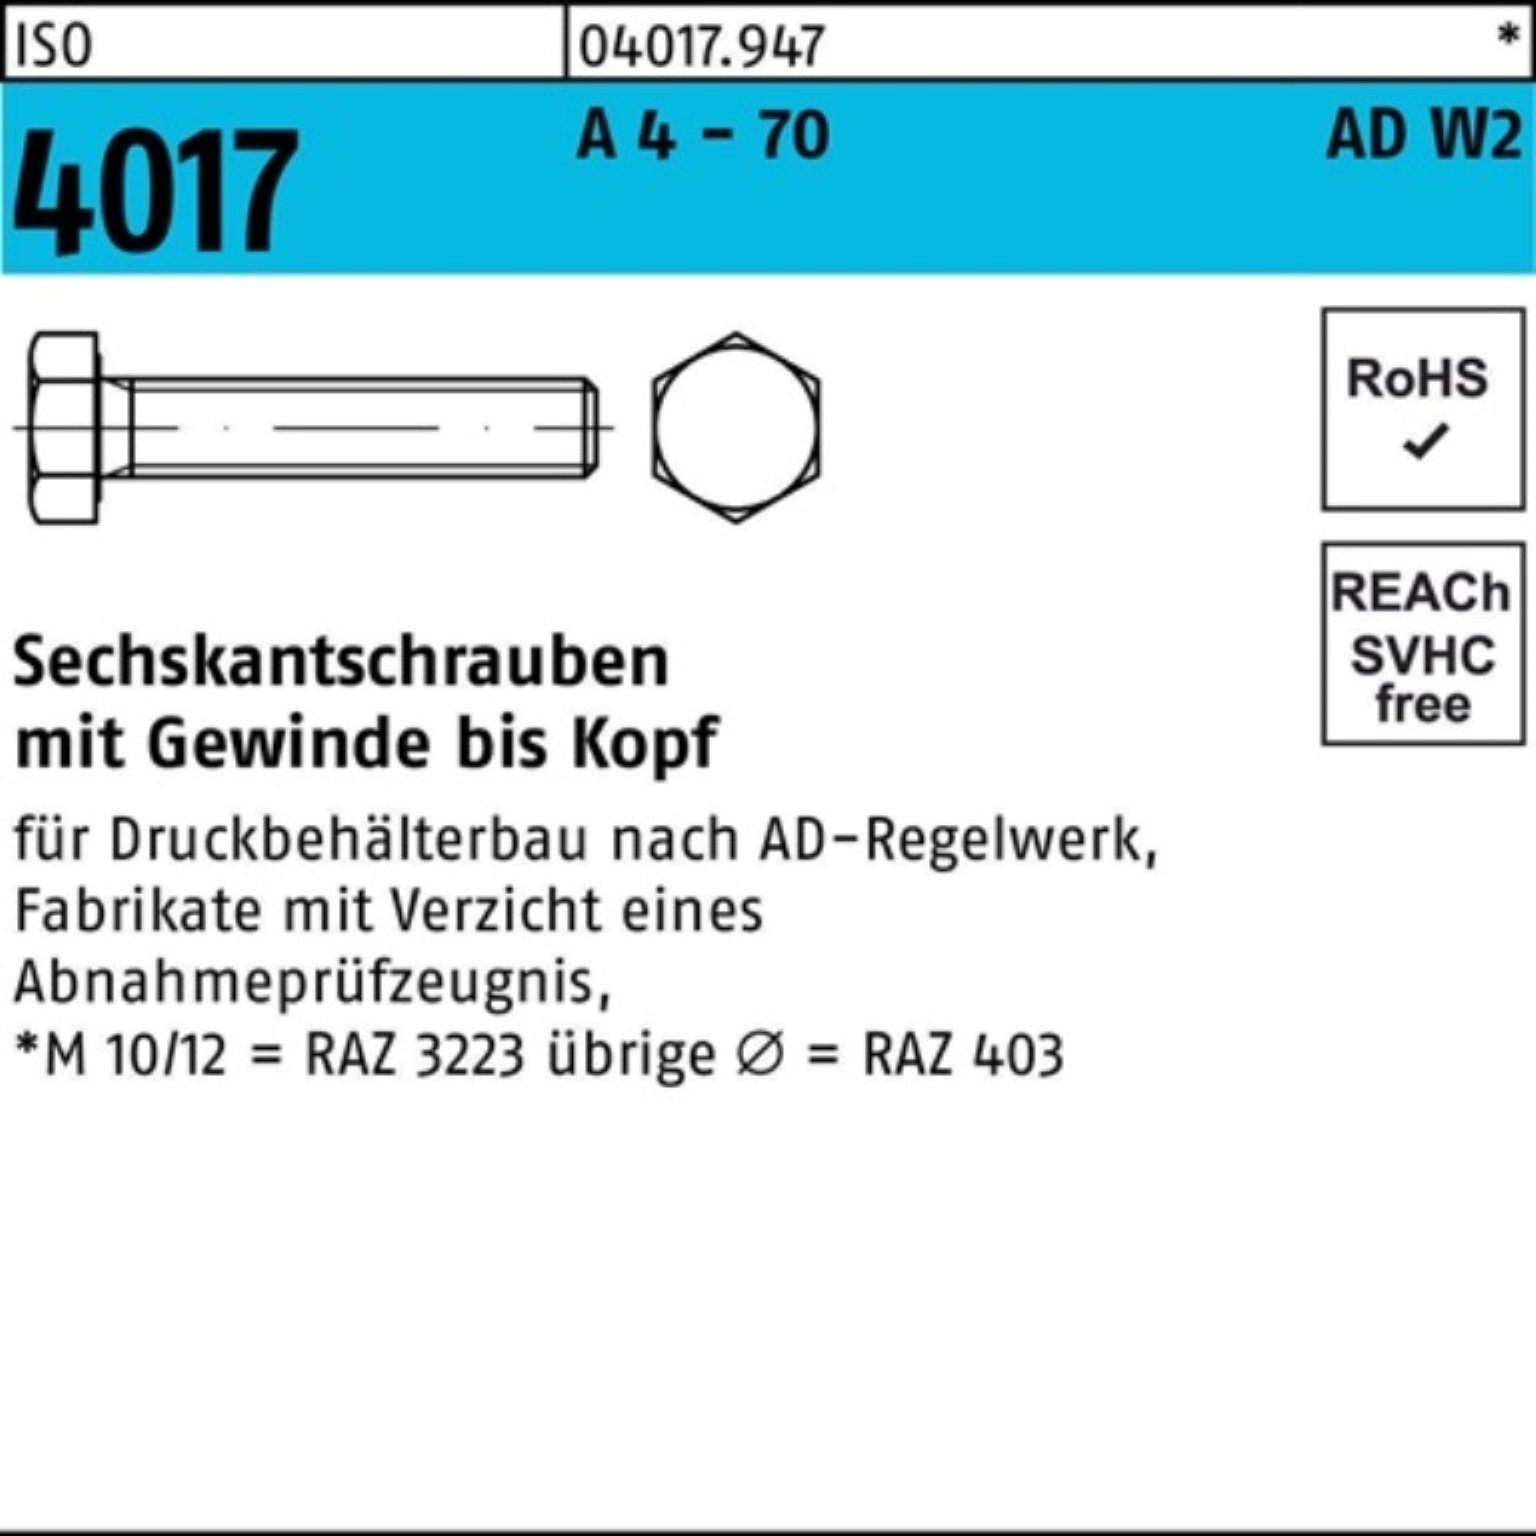 Bufab Sechskantschraube 100er Pack Sechskantschraube ISO 4017 VG M12x 55 A 4 - 70 AD-W2 50 St